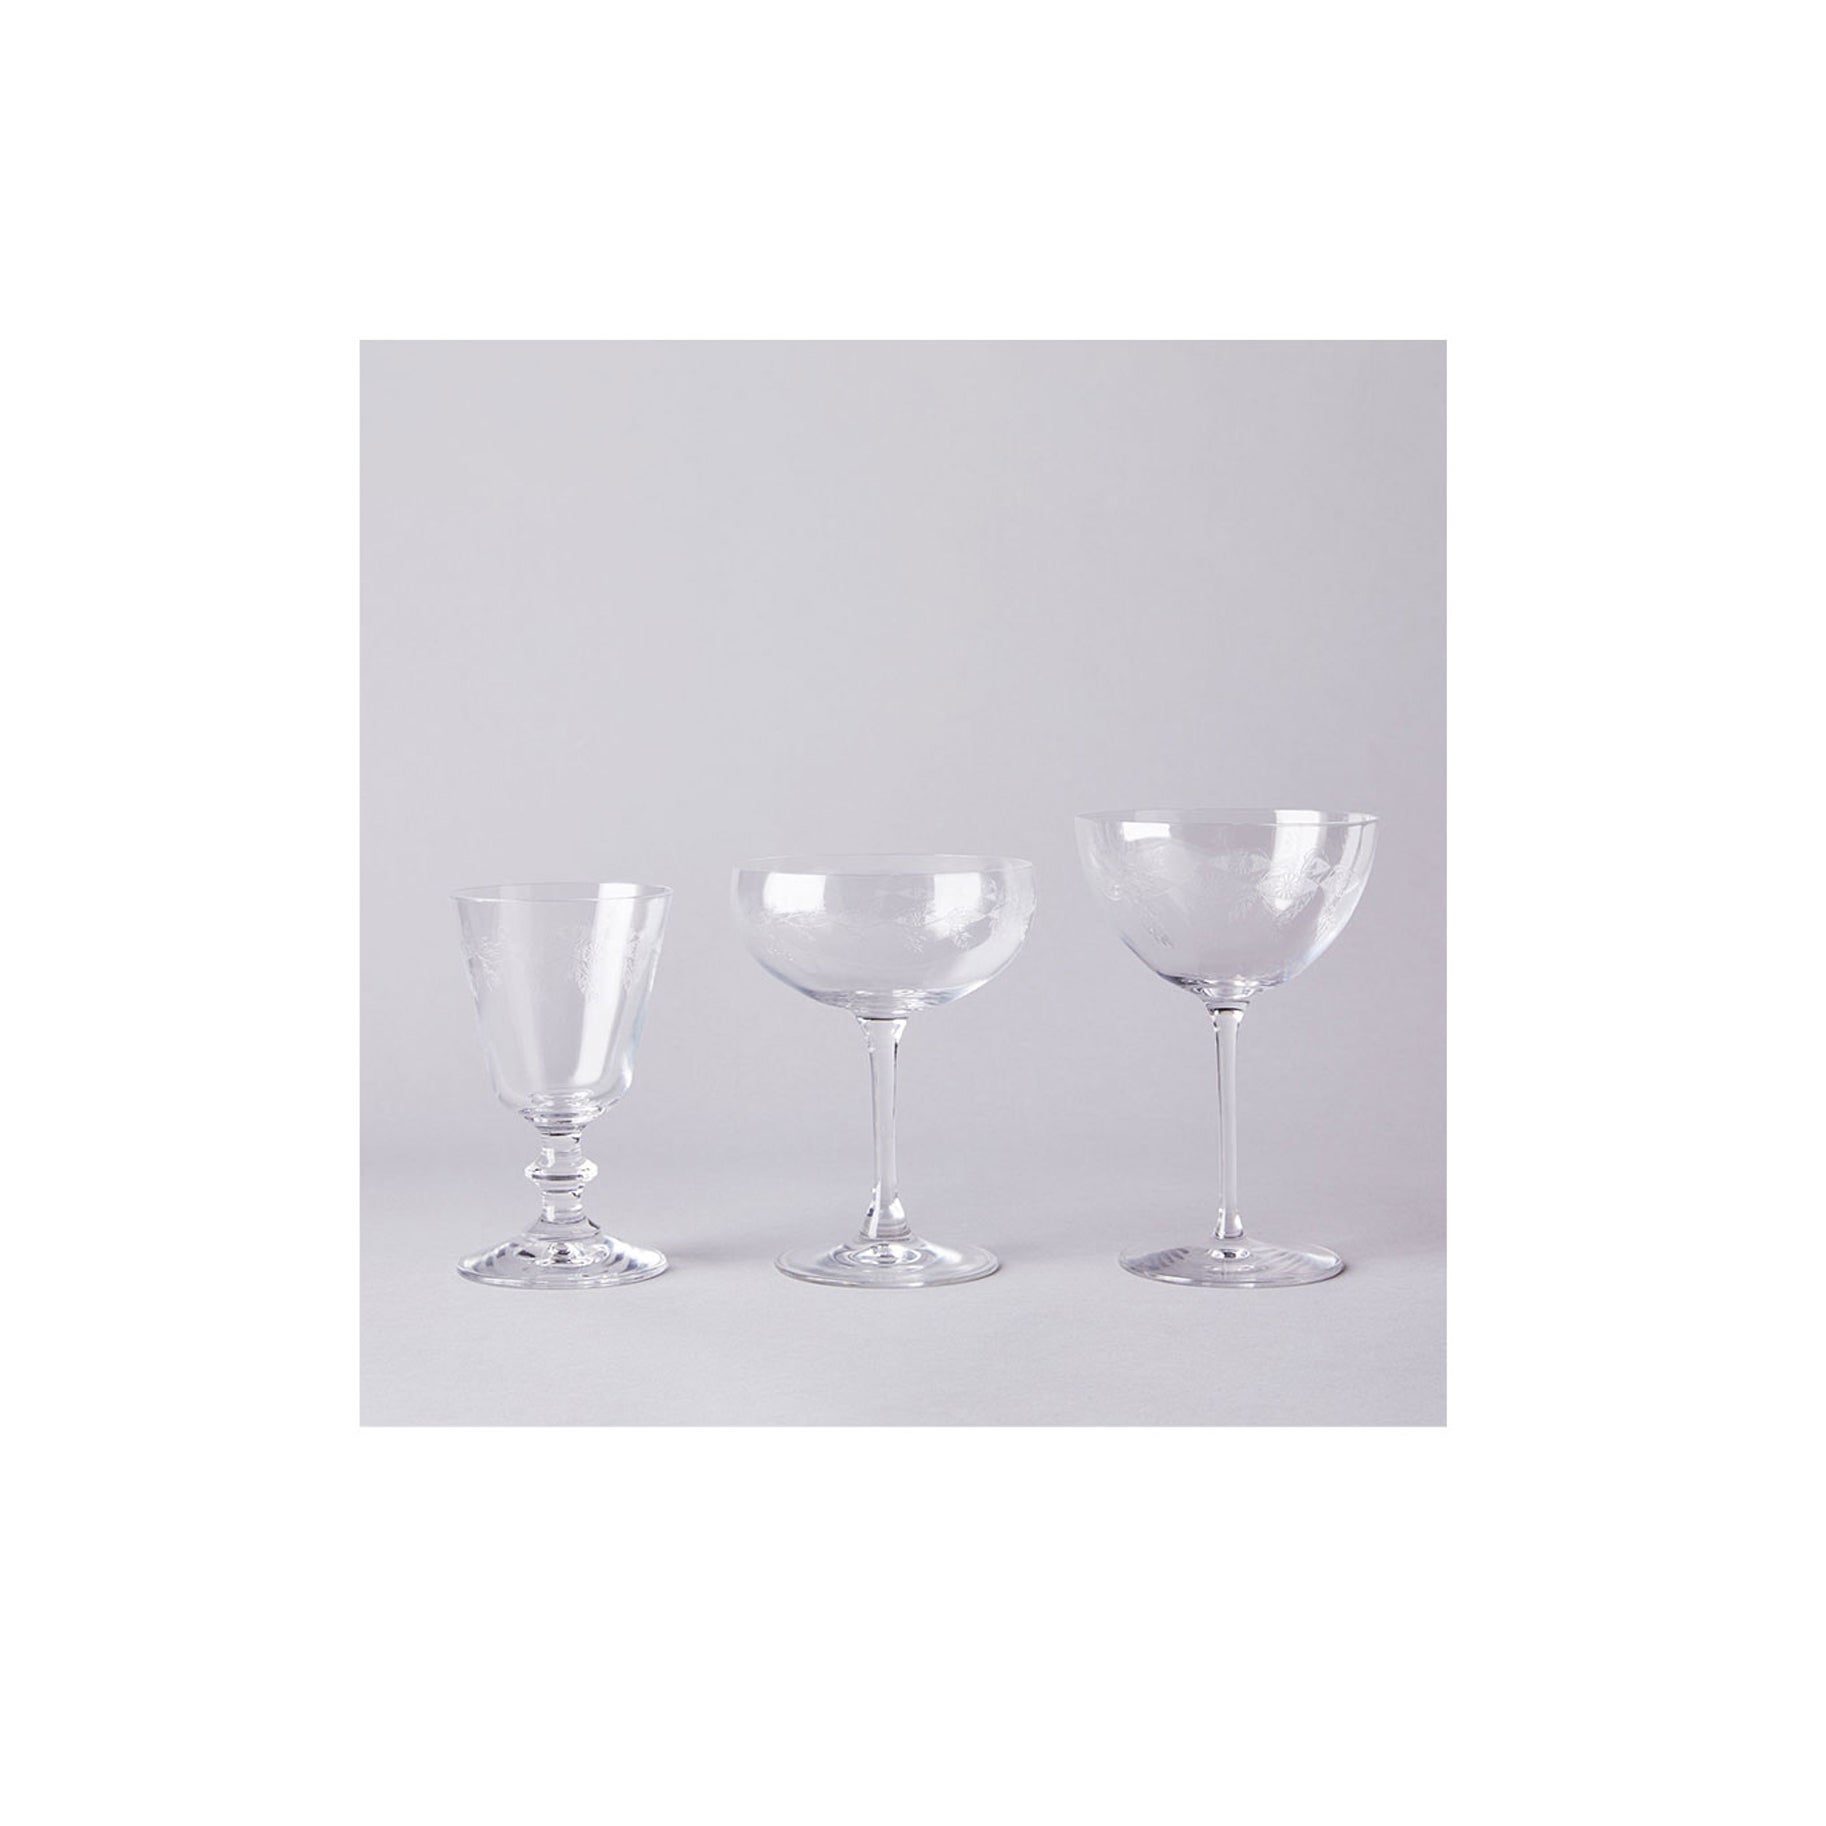 https://www.saveur.com/uploads/2021/09/17/The-Best-Martini-Glass-Option-Food-52-Vintage-Inspired-Martini-Glasses.jpg?auto=webp